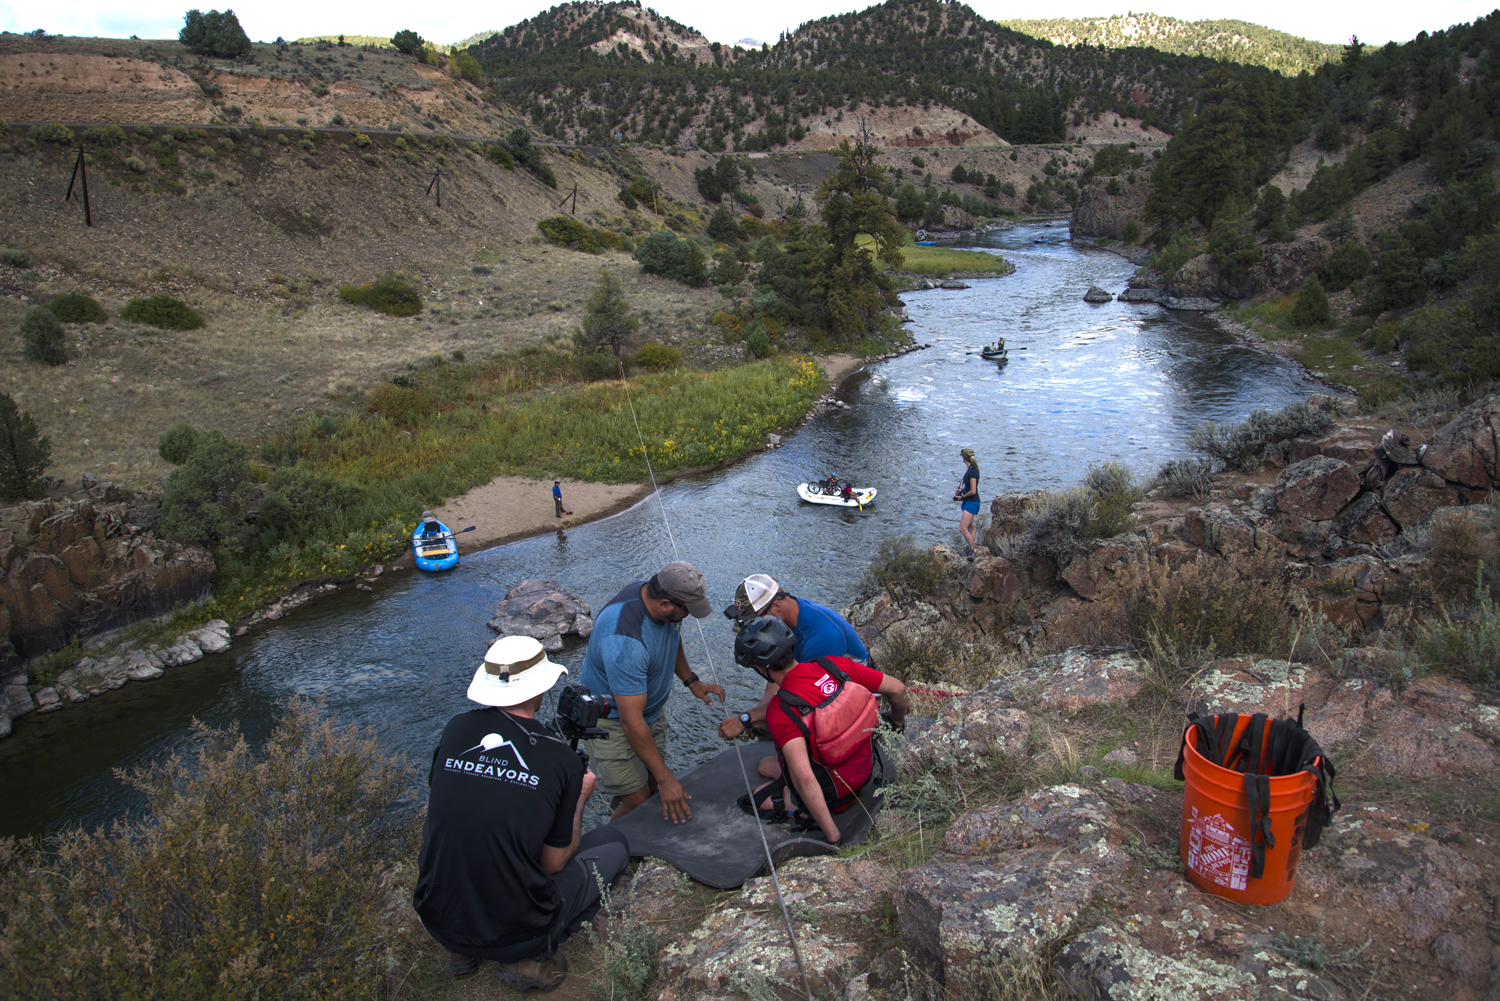 Team members crossed the Colorado River near Radium on a high zip line Saturday. Photograph by Brian Gliba.